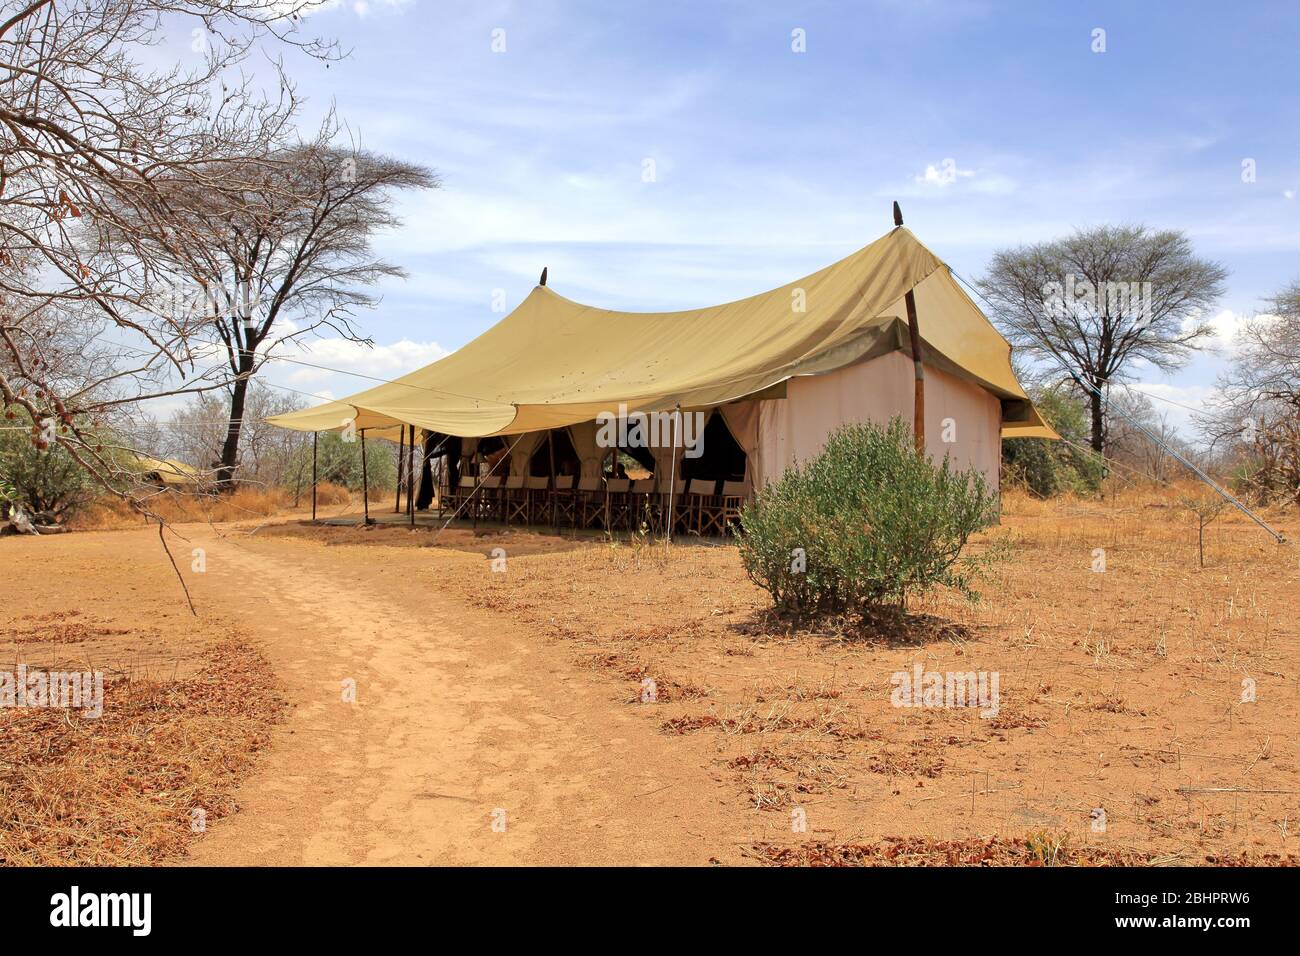 Safari tent in the African bush Stock Photo